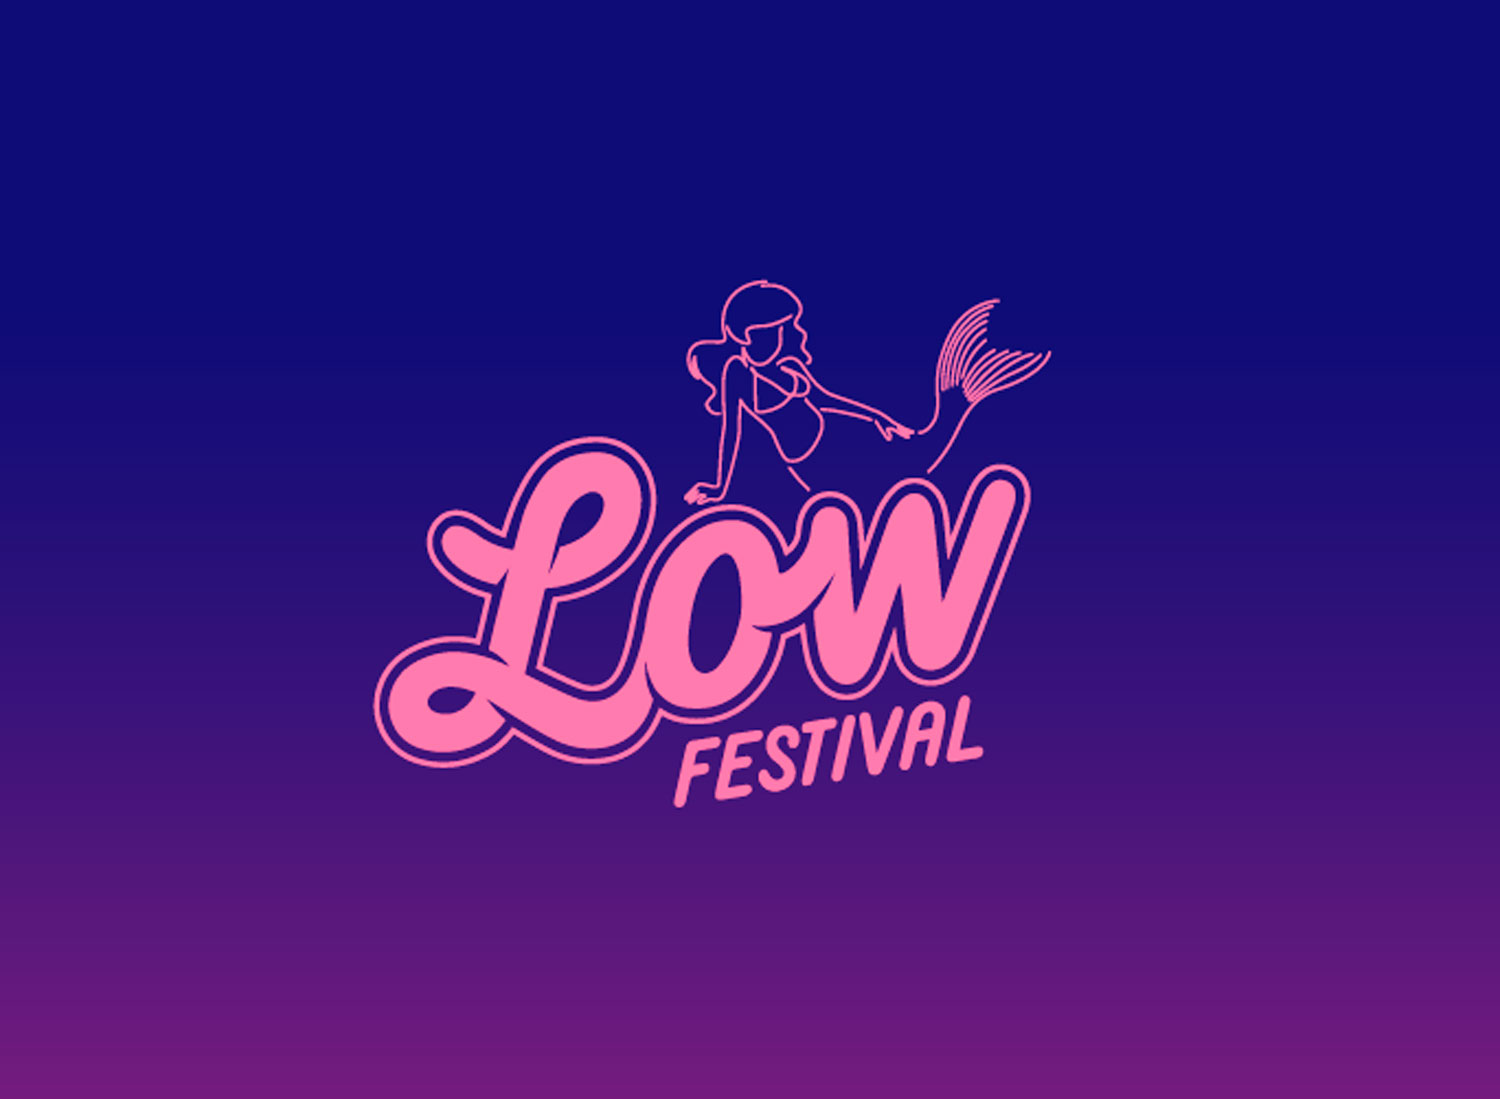 Low Festival 2021